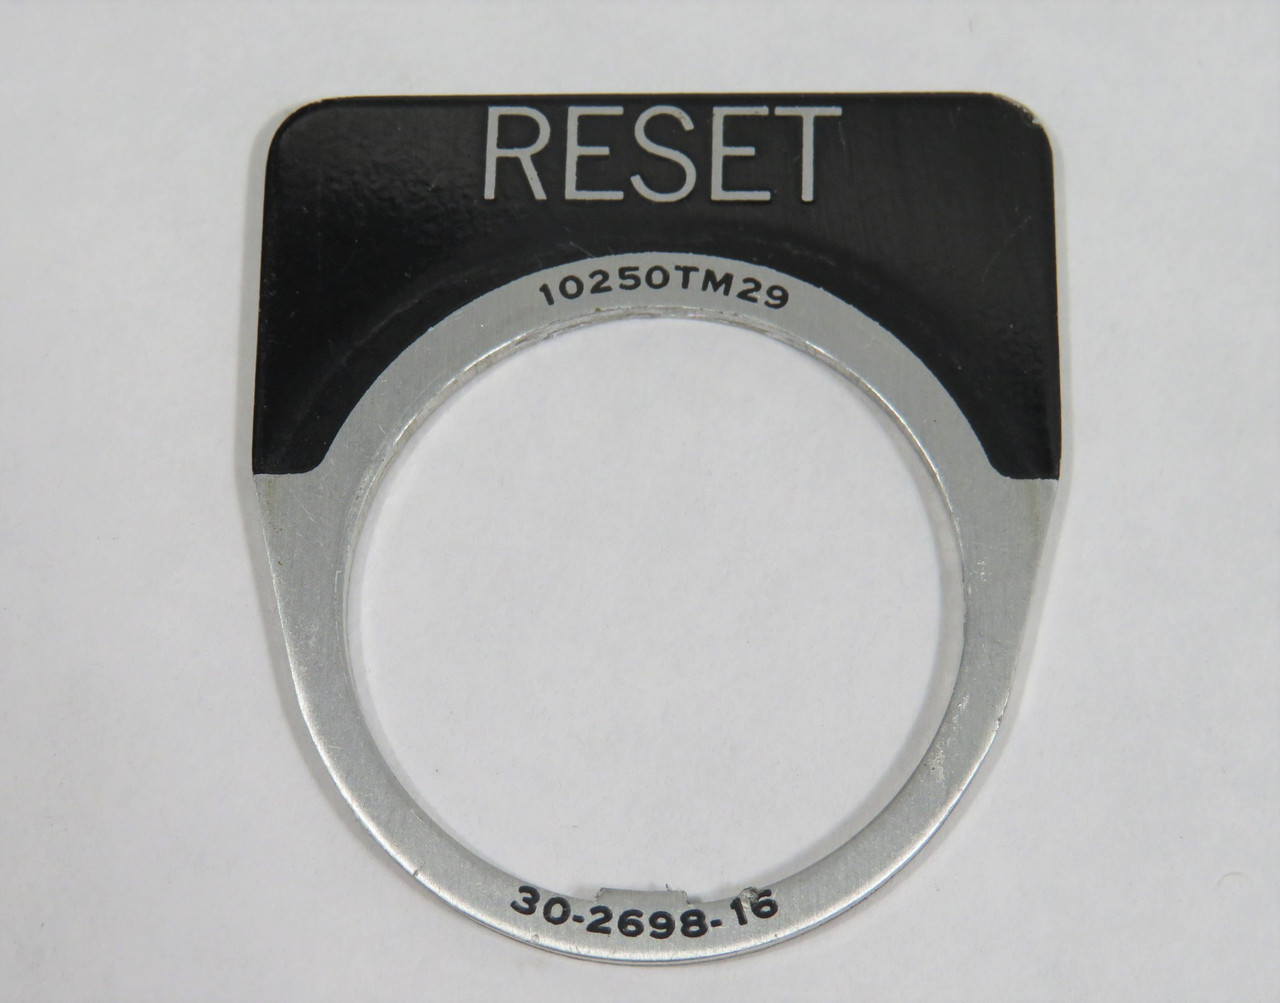 Cutler-Hammer 10250TM29 Push Button Legend Plate RESET 30-2698-16 USED